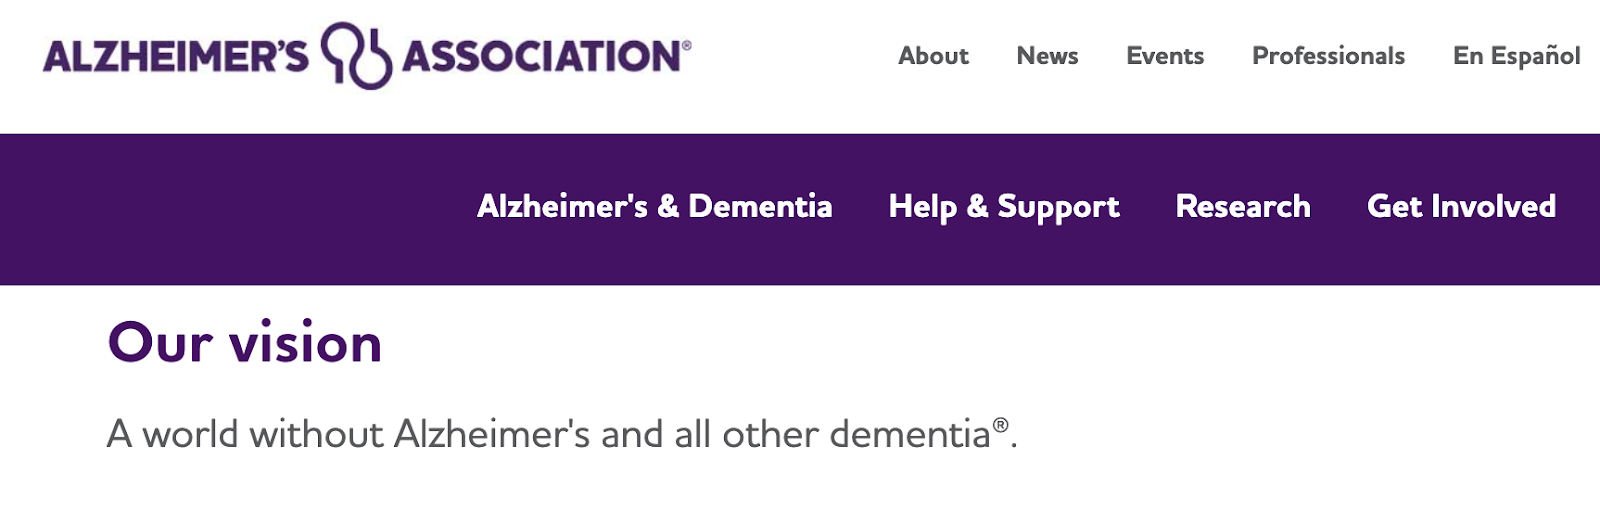 Best Vision Statement Examples: Alzheimer's Association